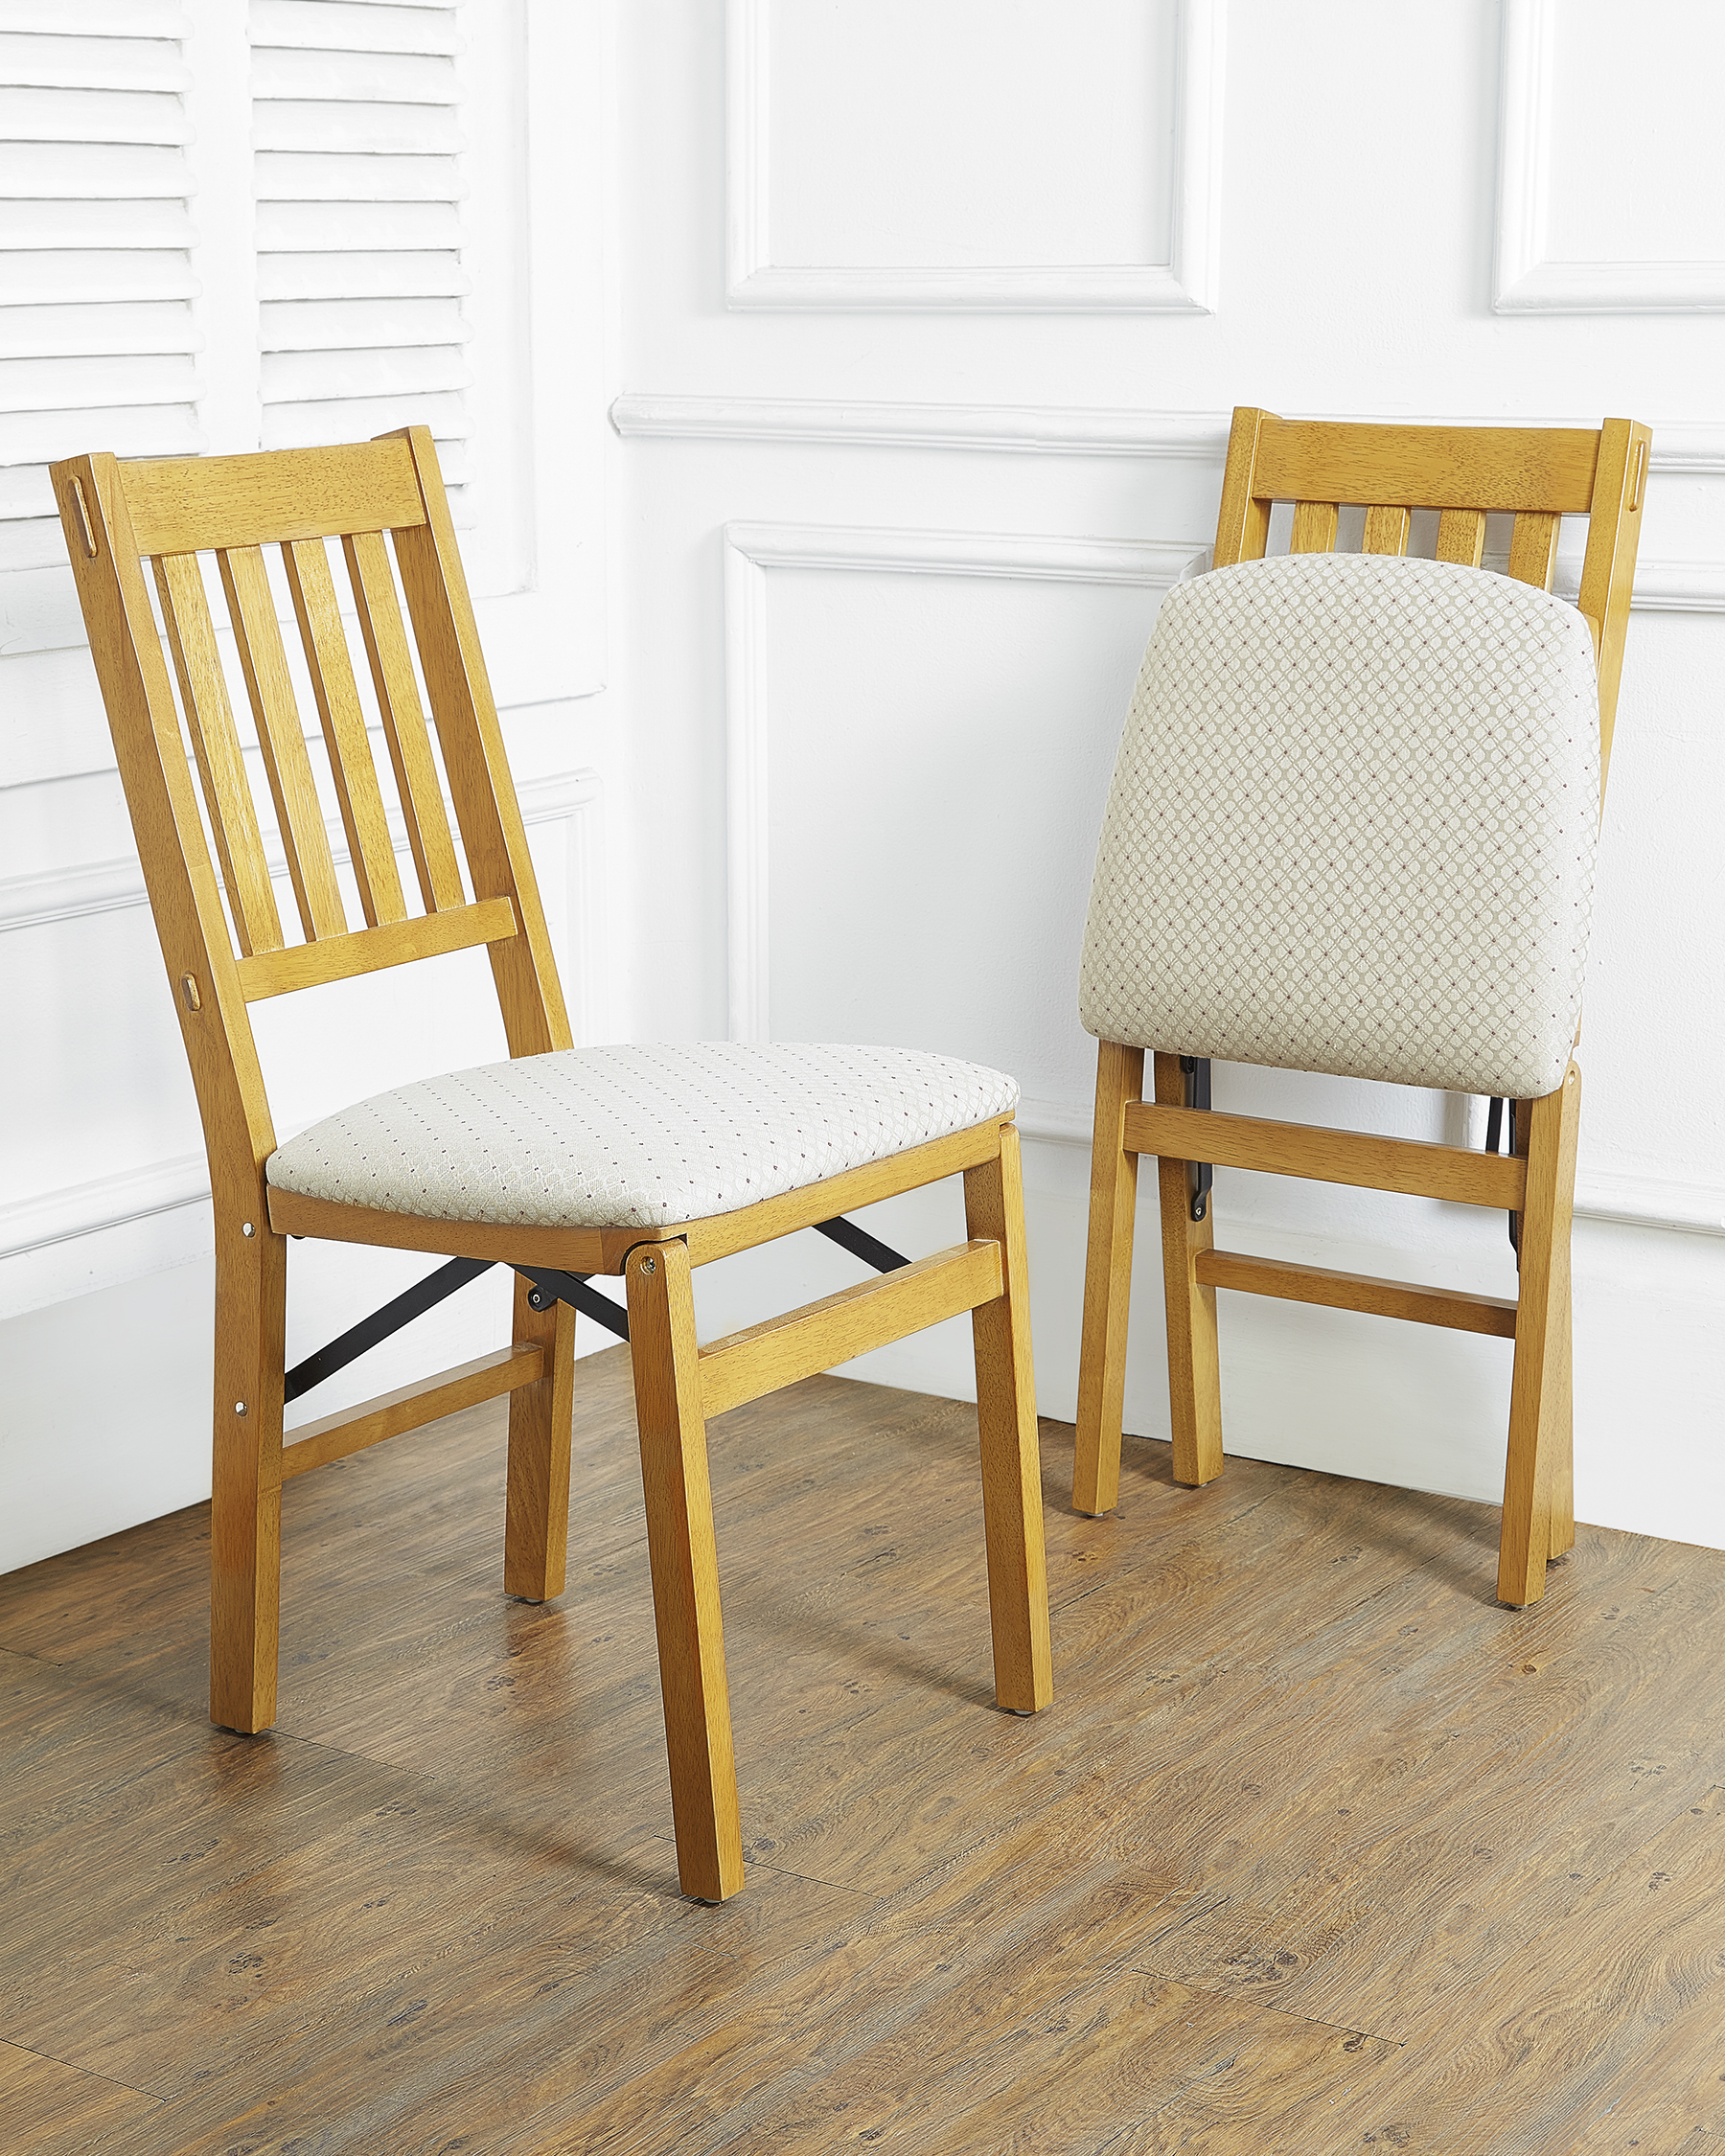 oak folding chairs